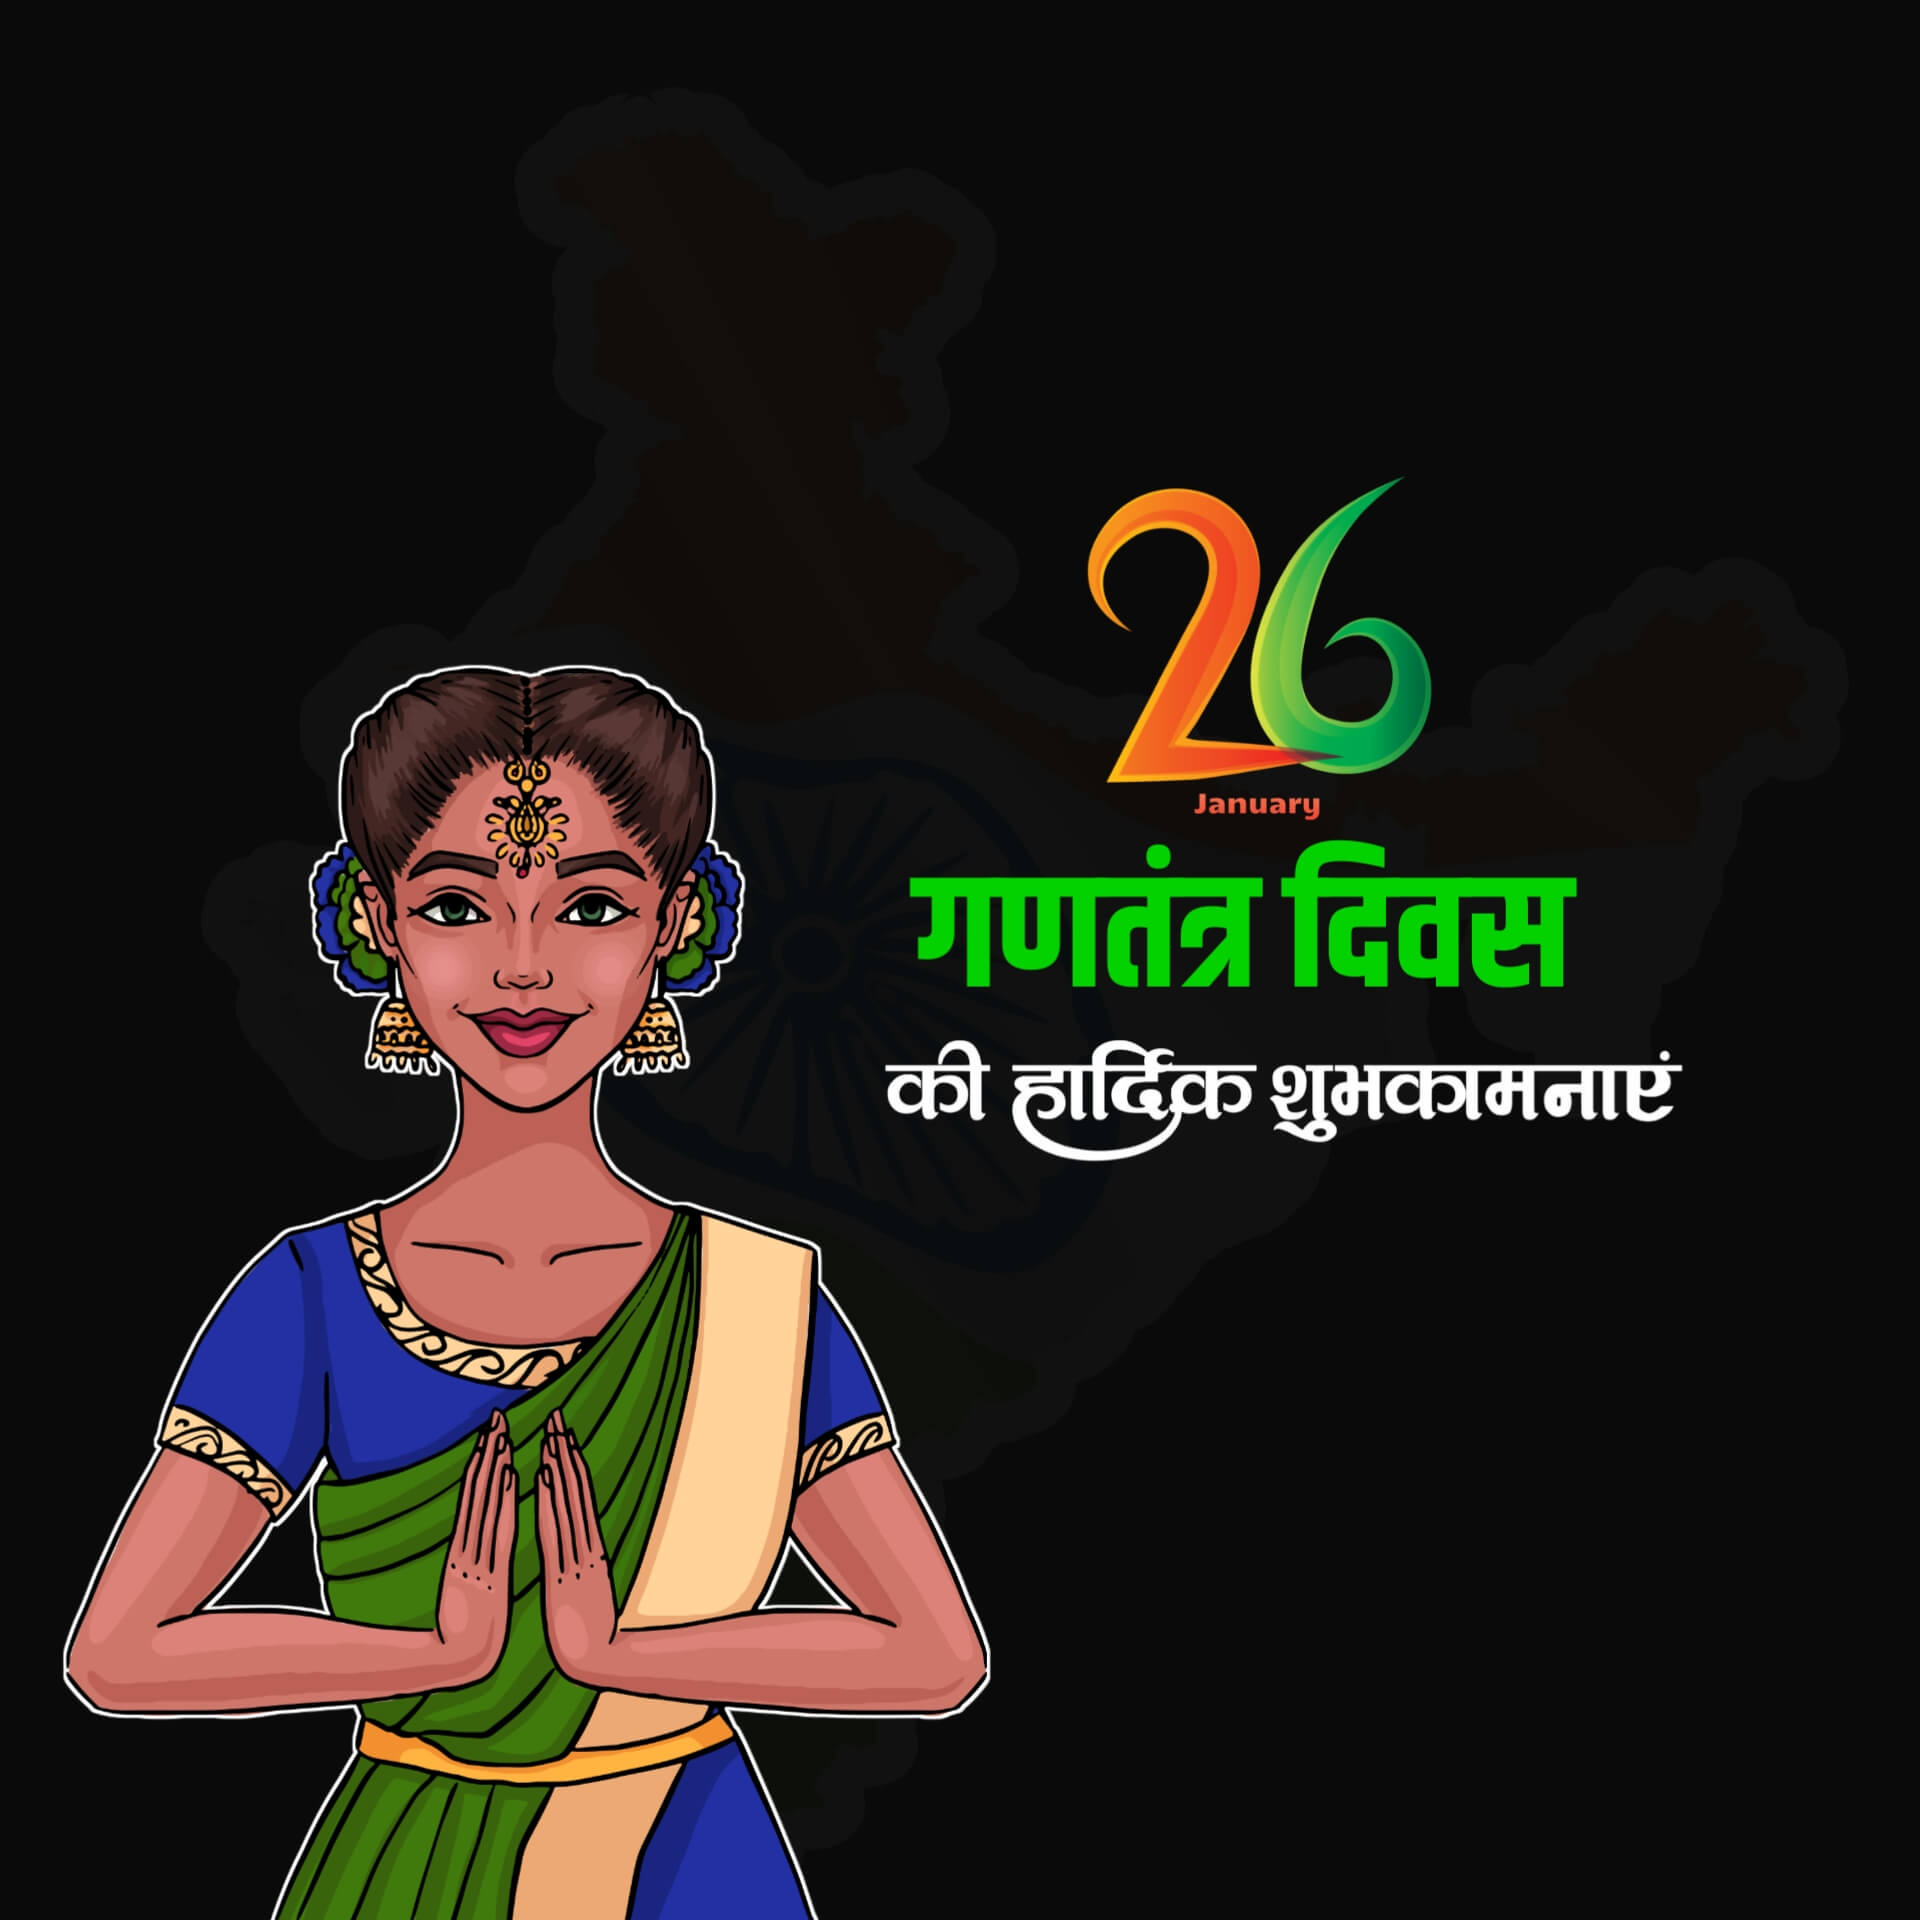 Happy 26 january image in Hindi